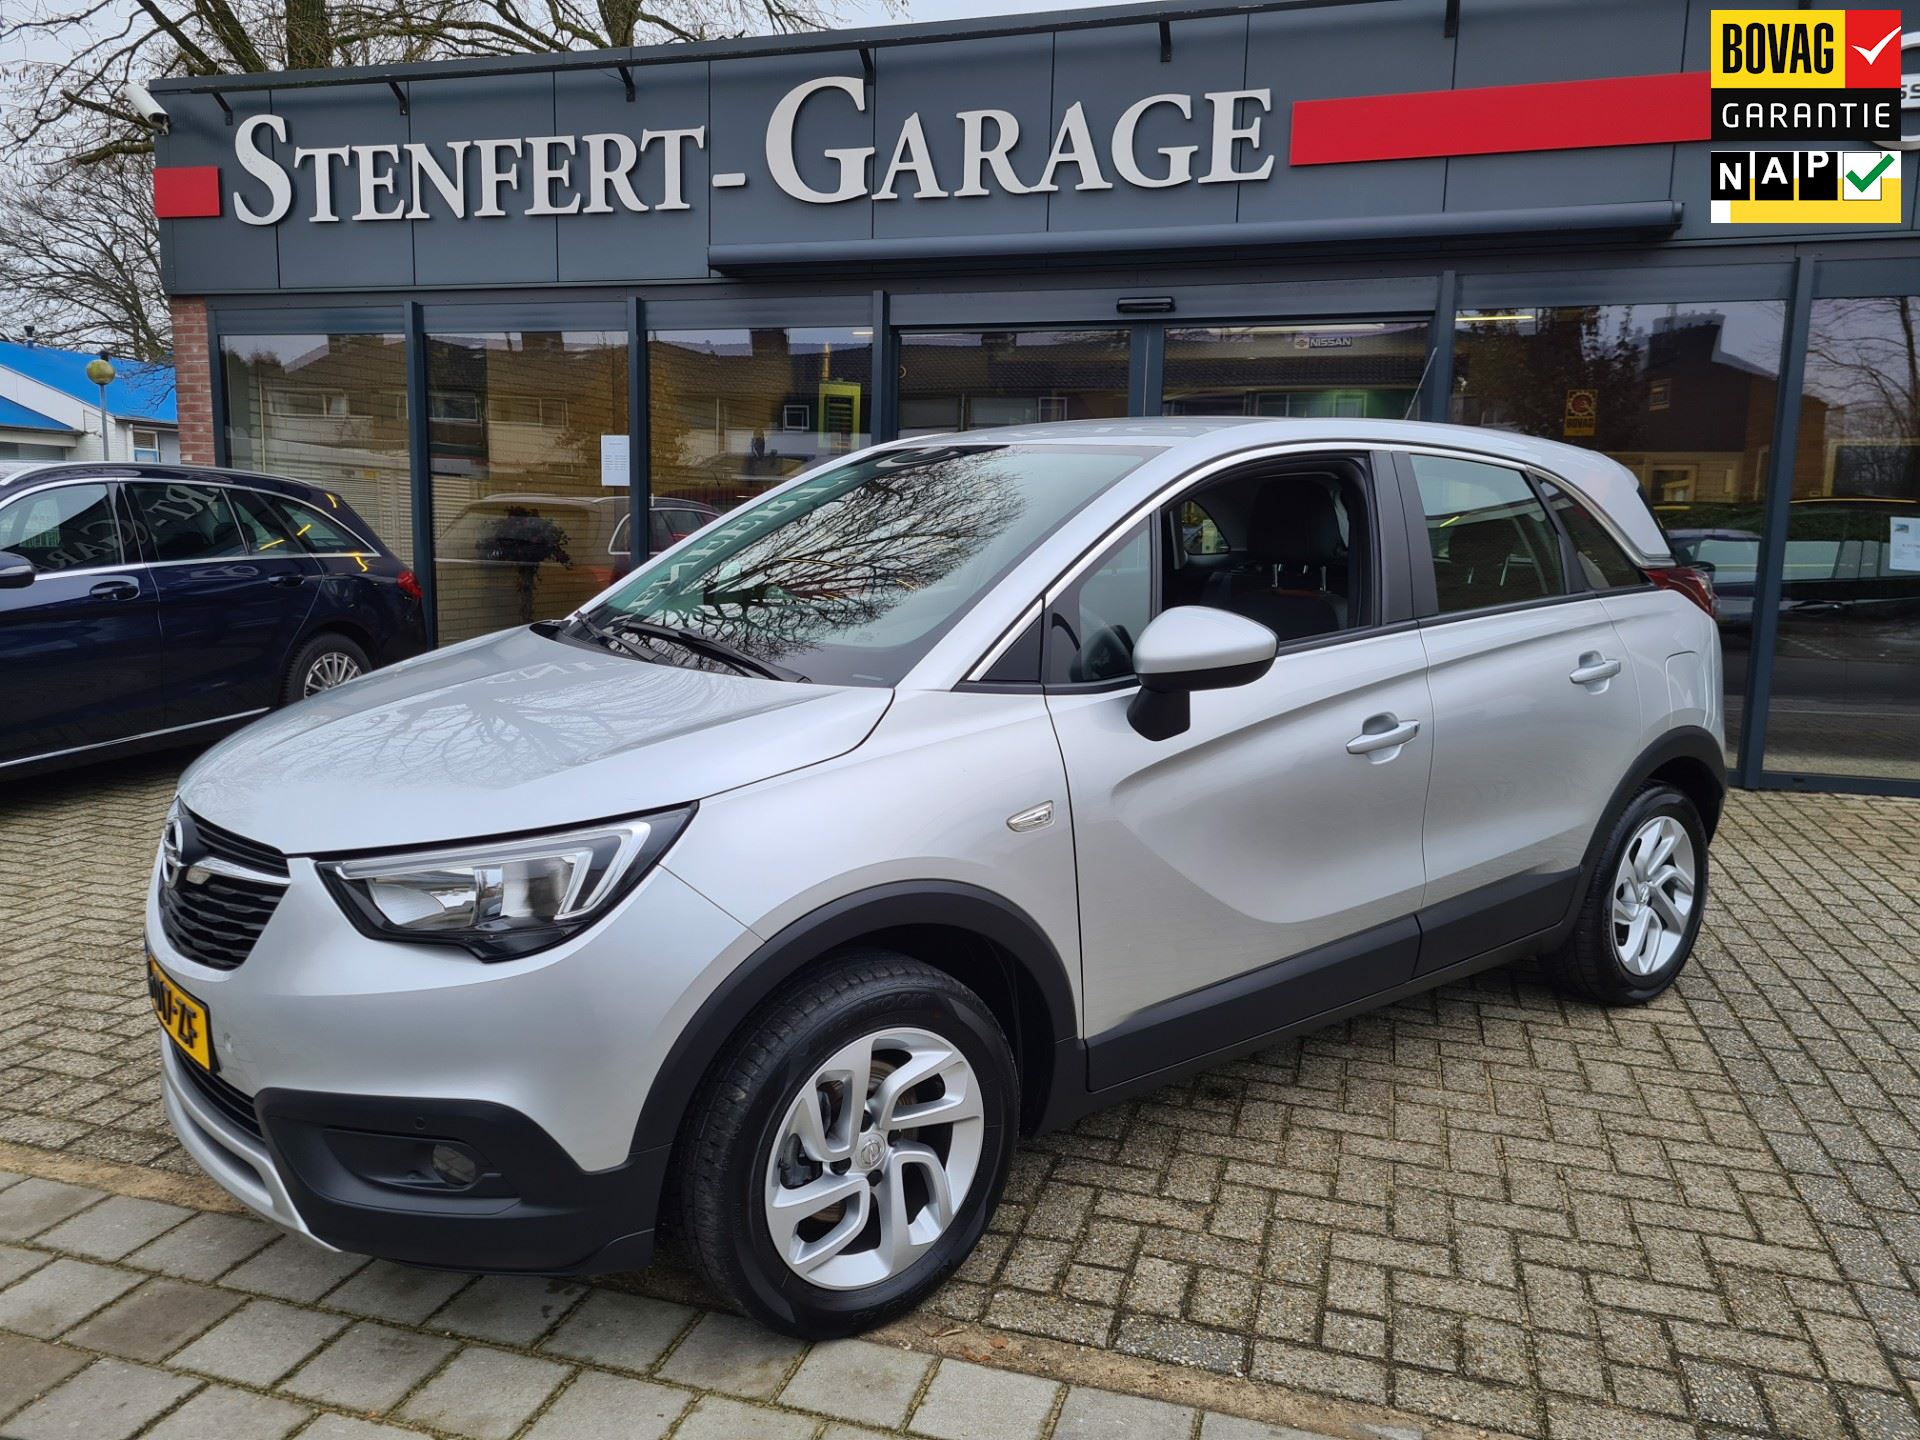 Opel CROSSLAND X occasion - Stenfert-Garage